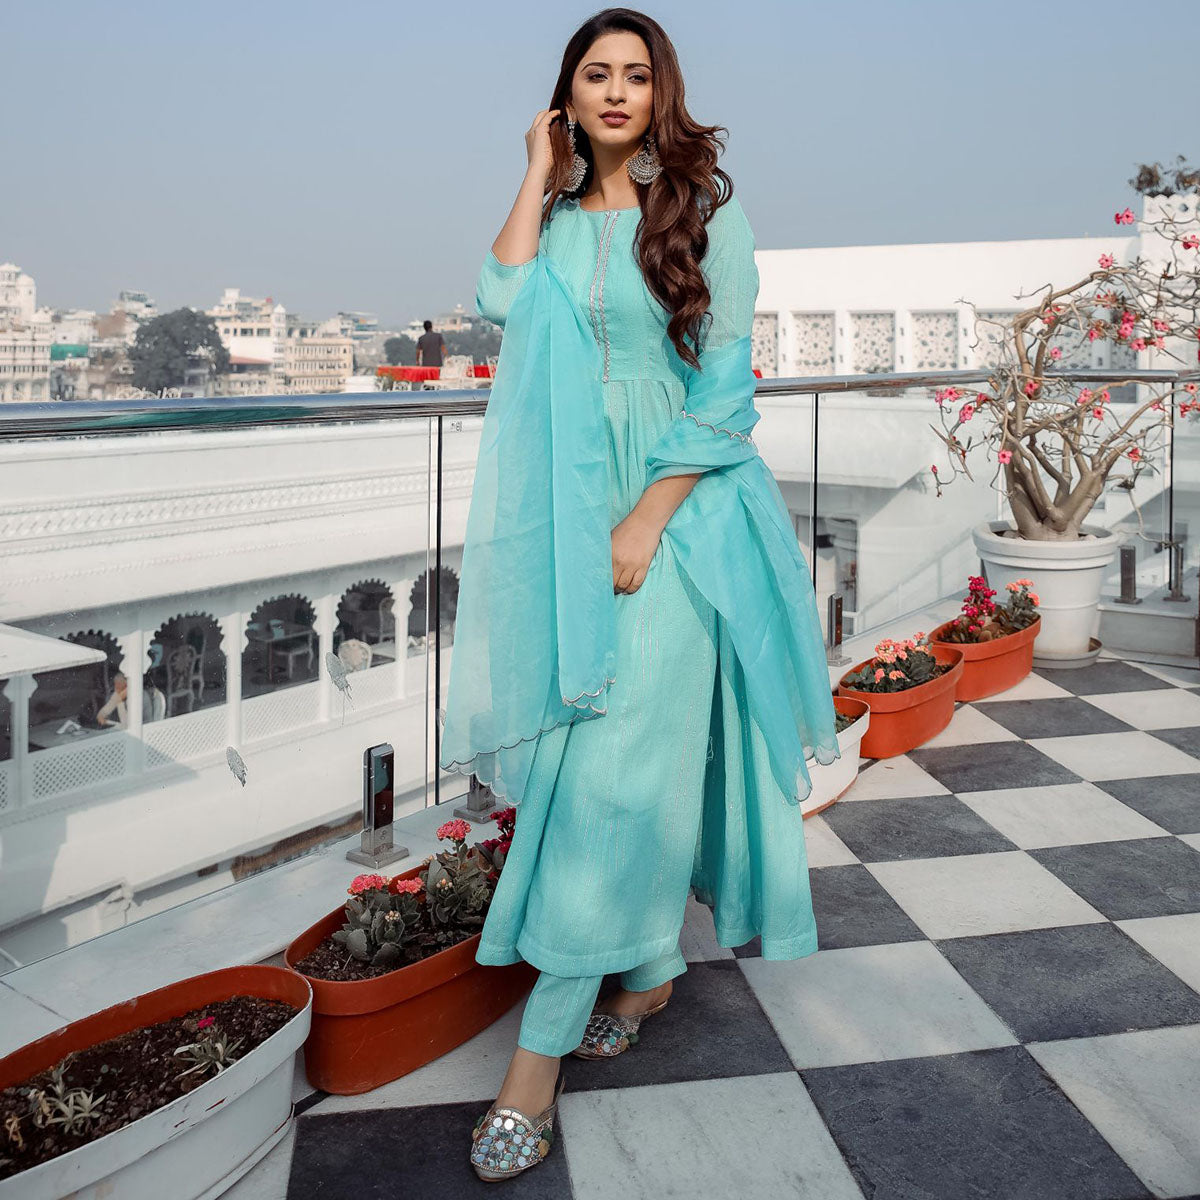 Sky Blue Salwar Suit | Buy Sky Blue Colour Salwar Suits Online | KalaNiketan